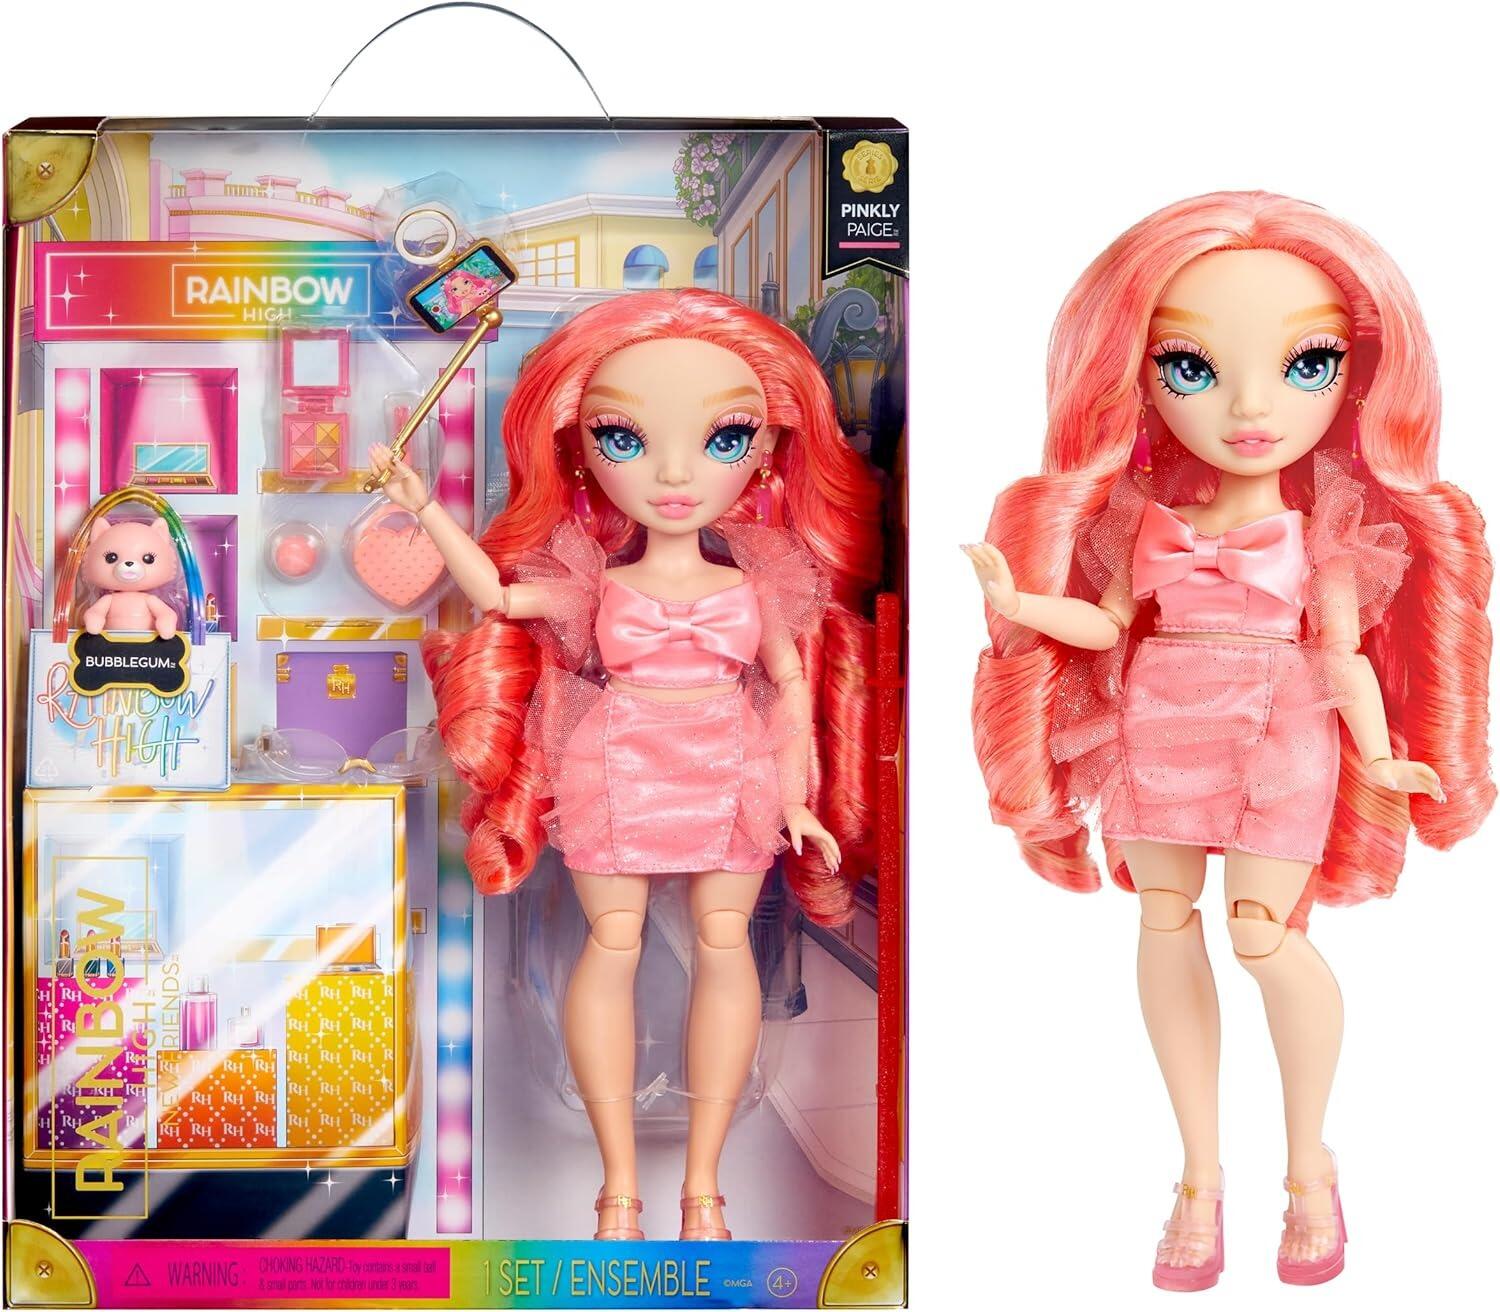 Rainbow High Fashion Doll - Pinkly Paige